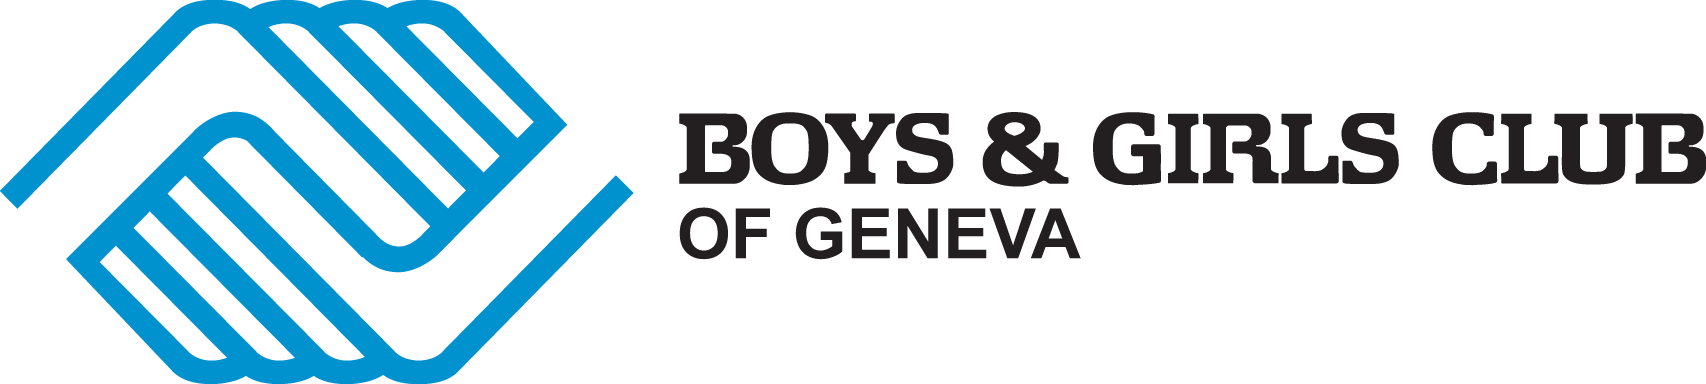 Girls Club Logo - Logo Download | Boys & Girls Club of Geneva